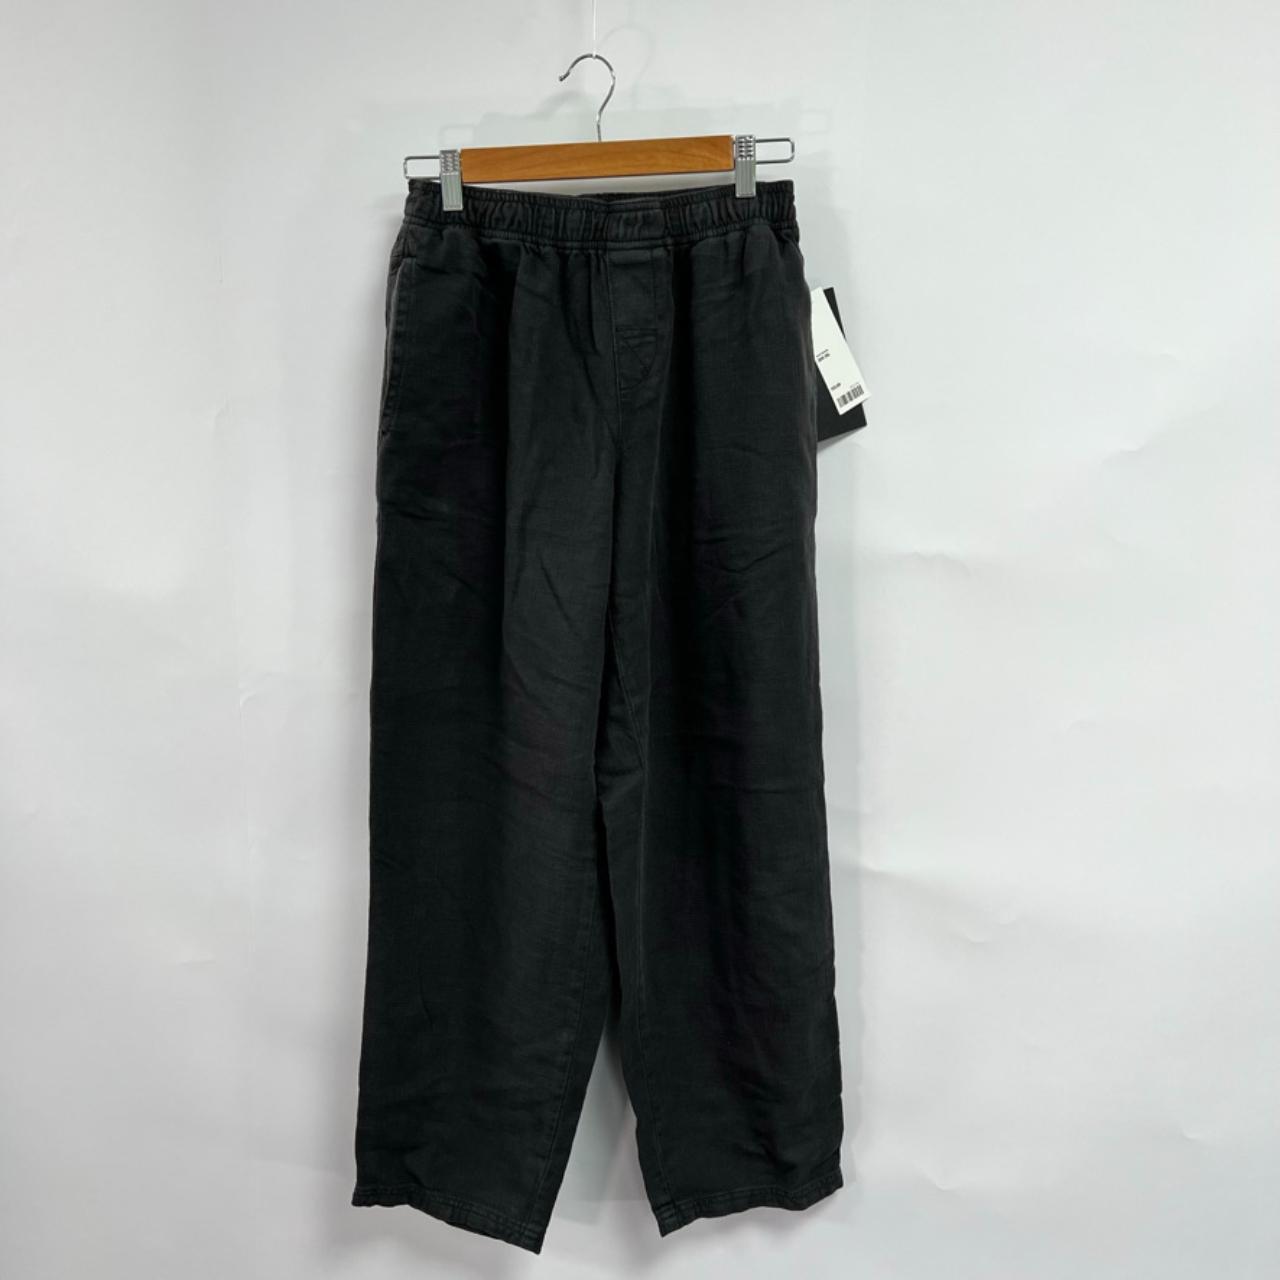 Urban Outfitters Loom PJ Pants Washed Black/Grey.... - Depop